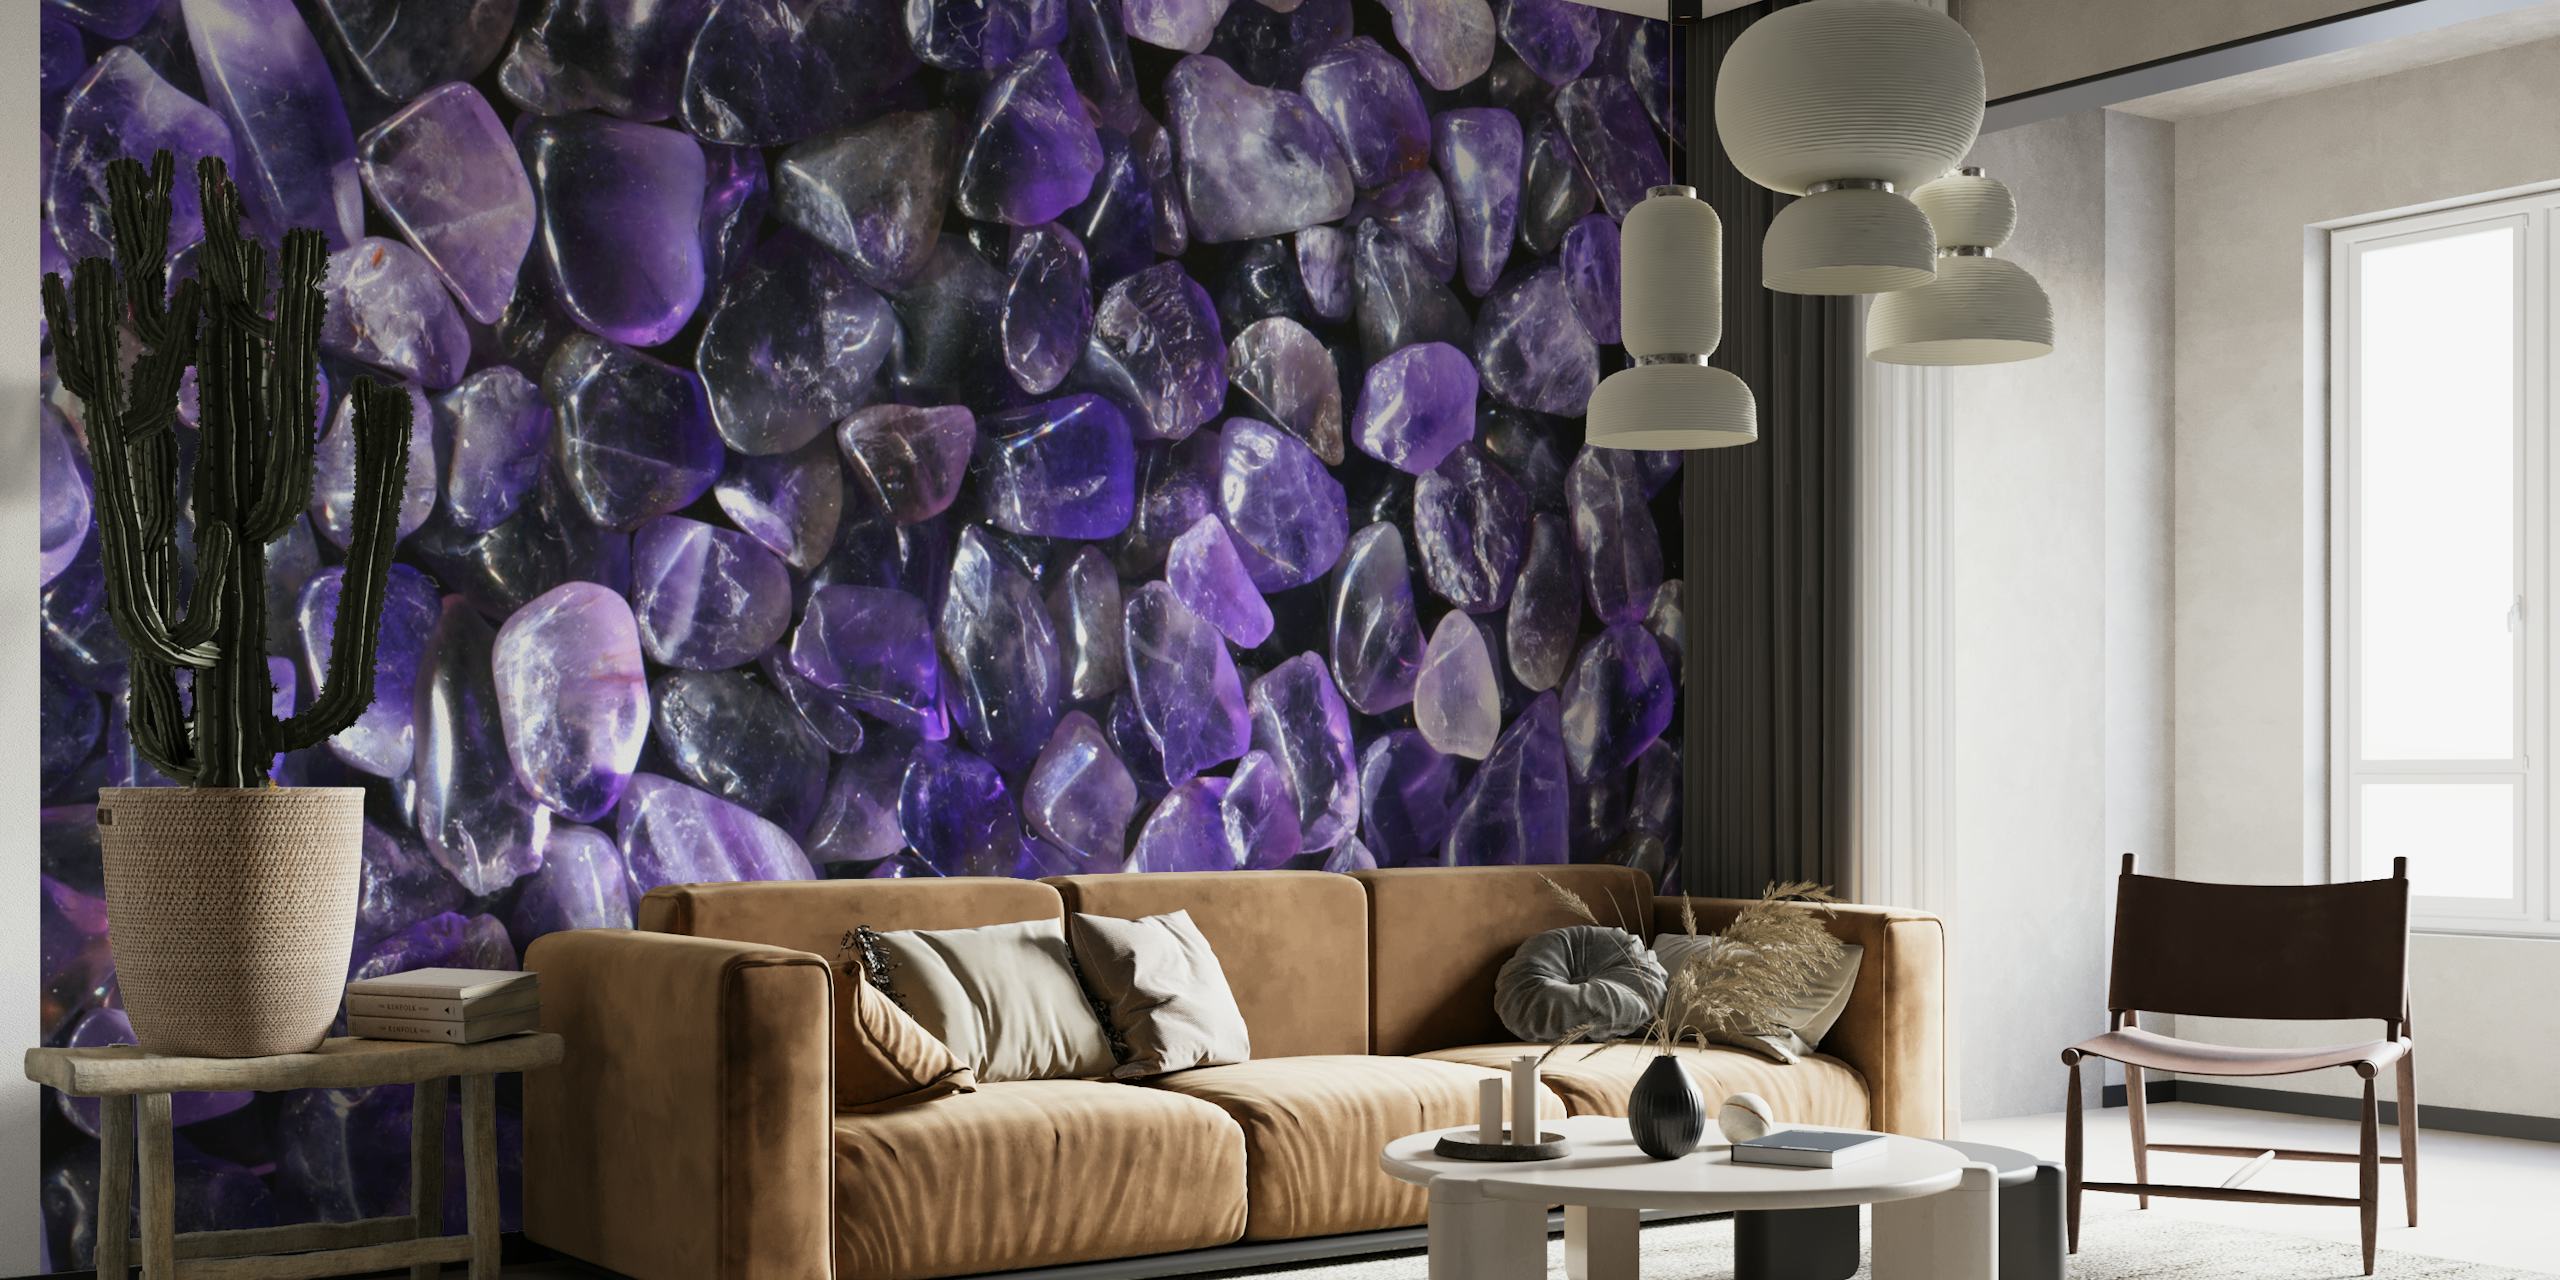 Lilac gemstone wall mural with a lavish spread of purple crystalline stones